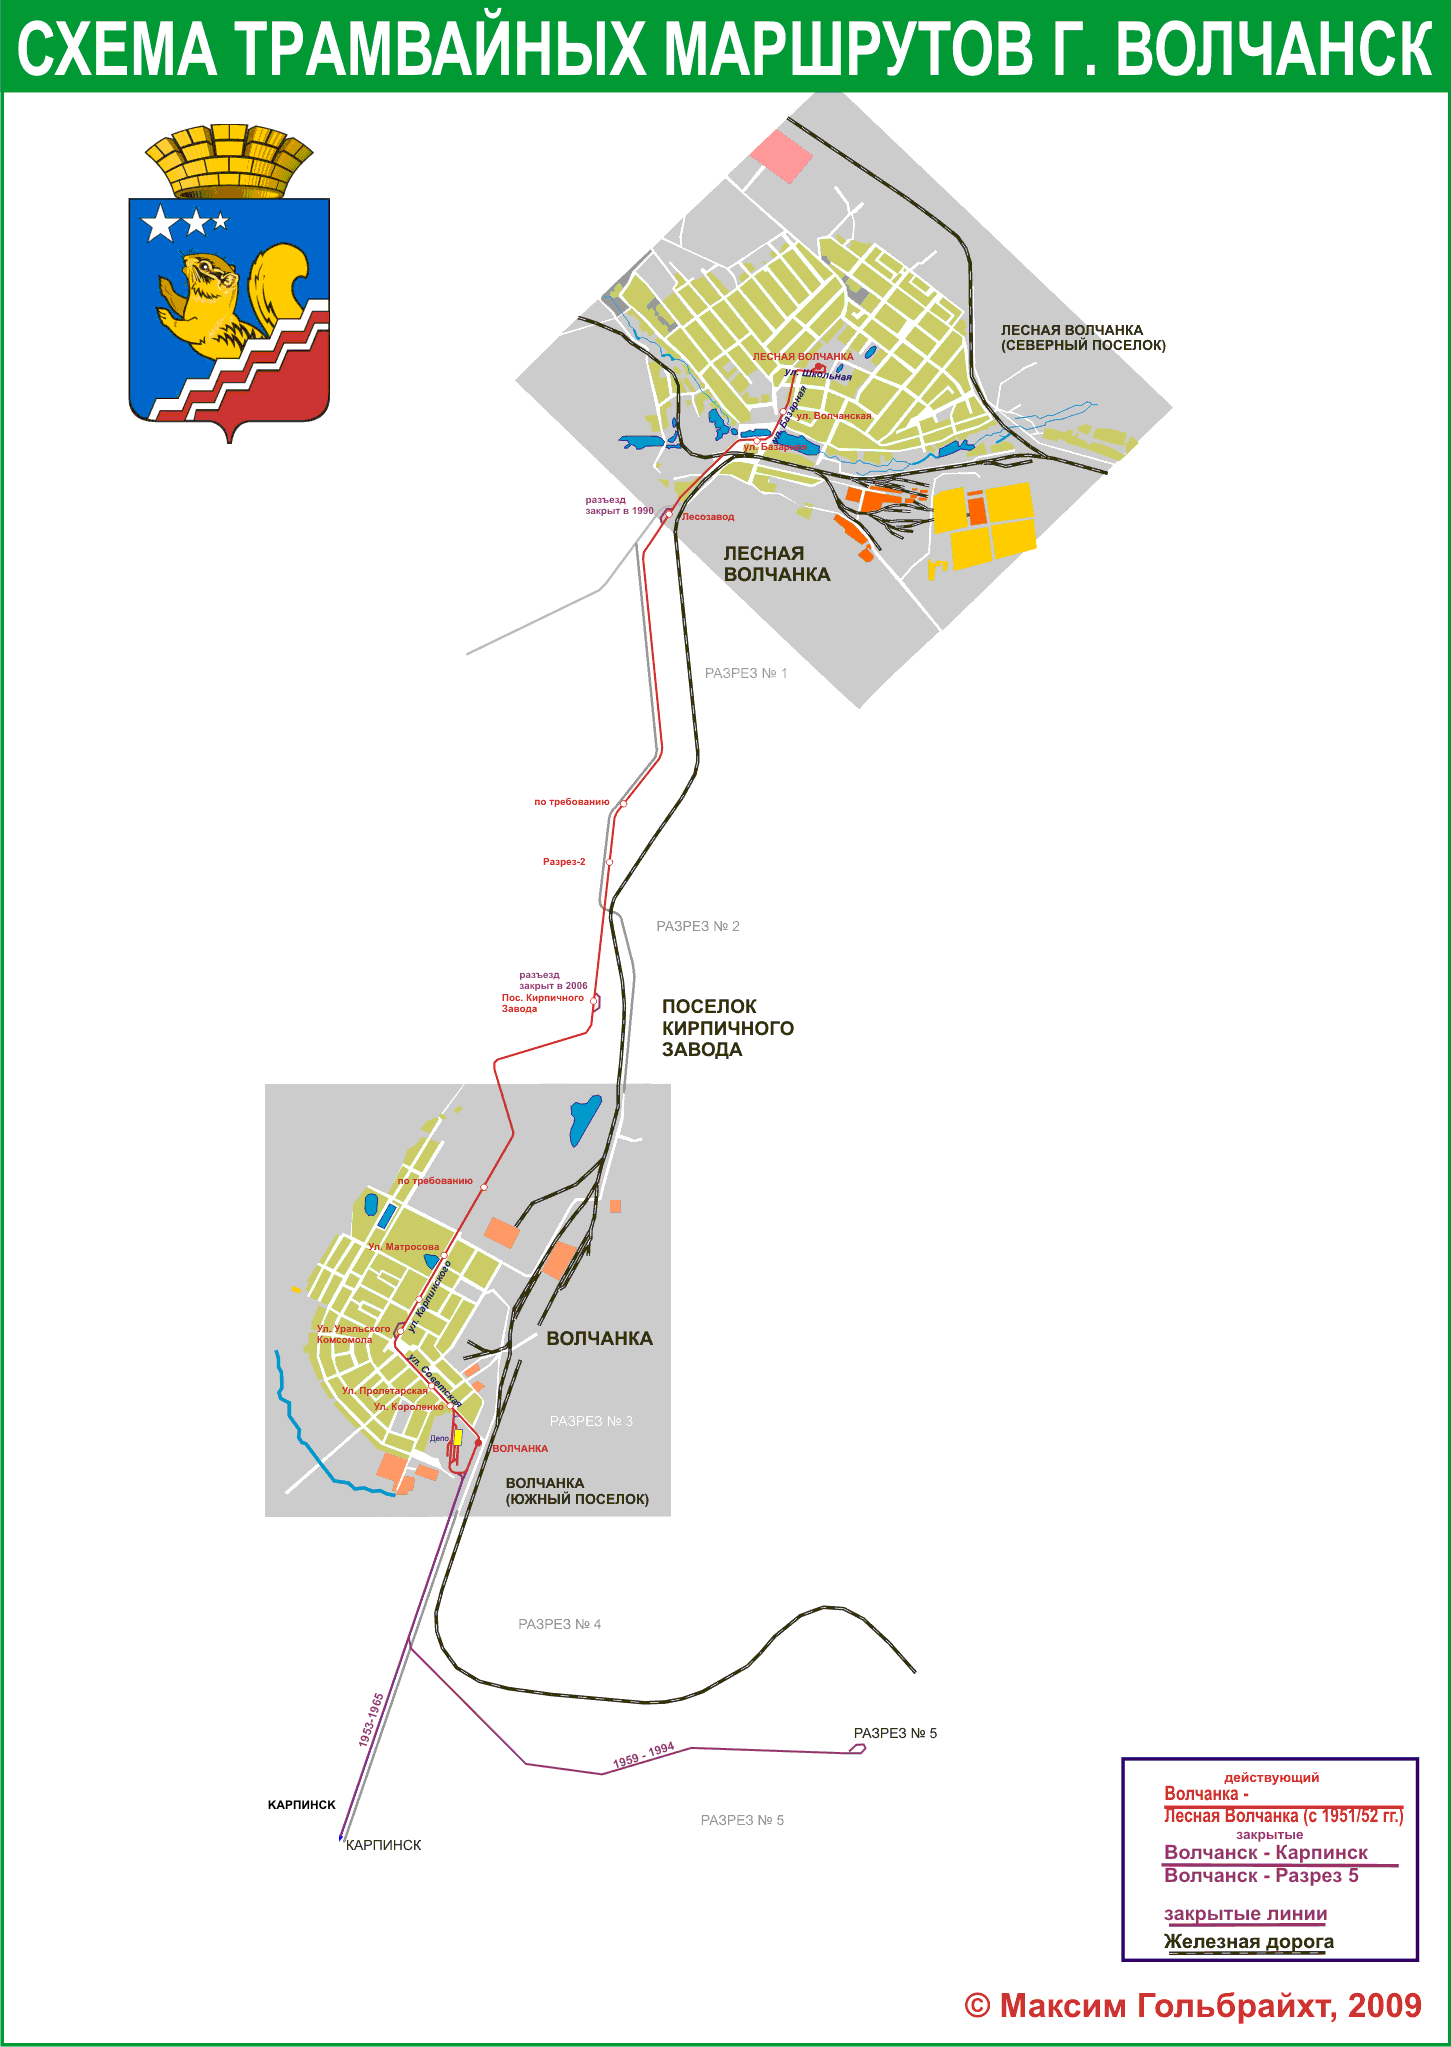 Volchansk — Maps